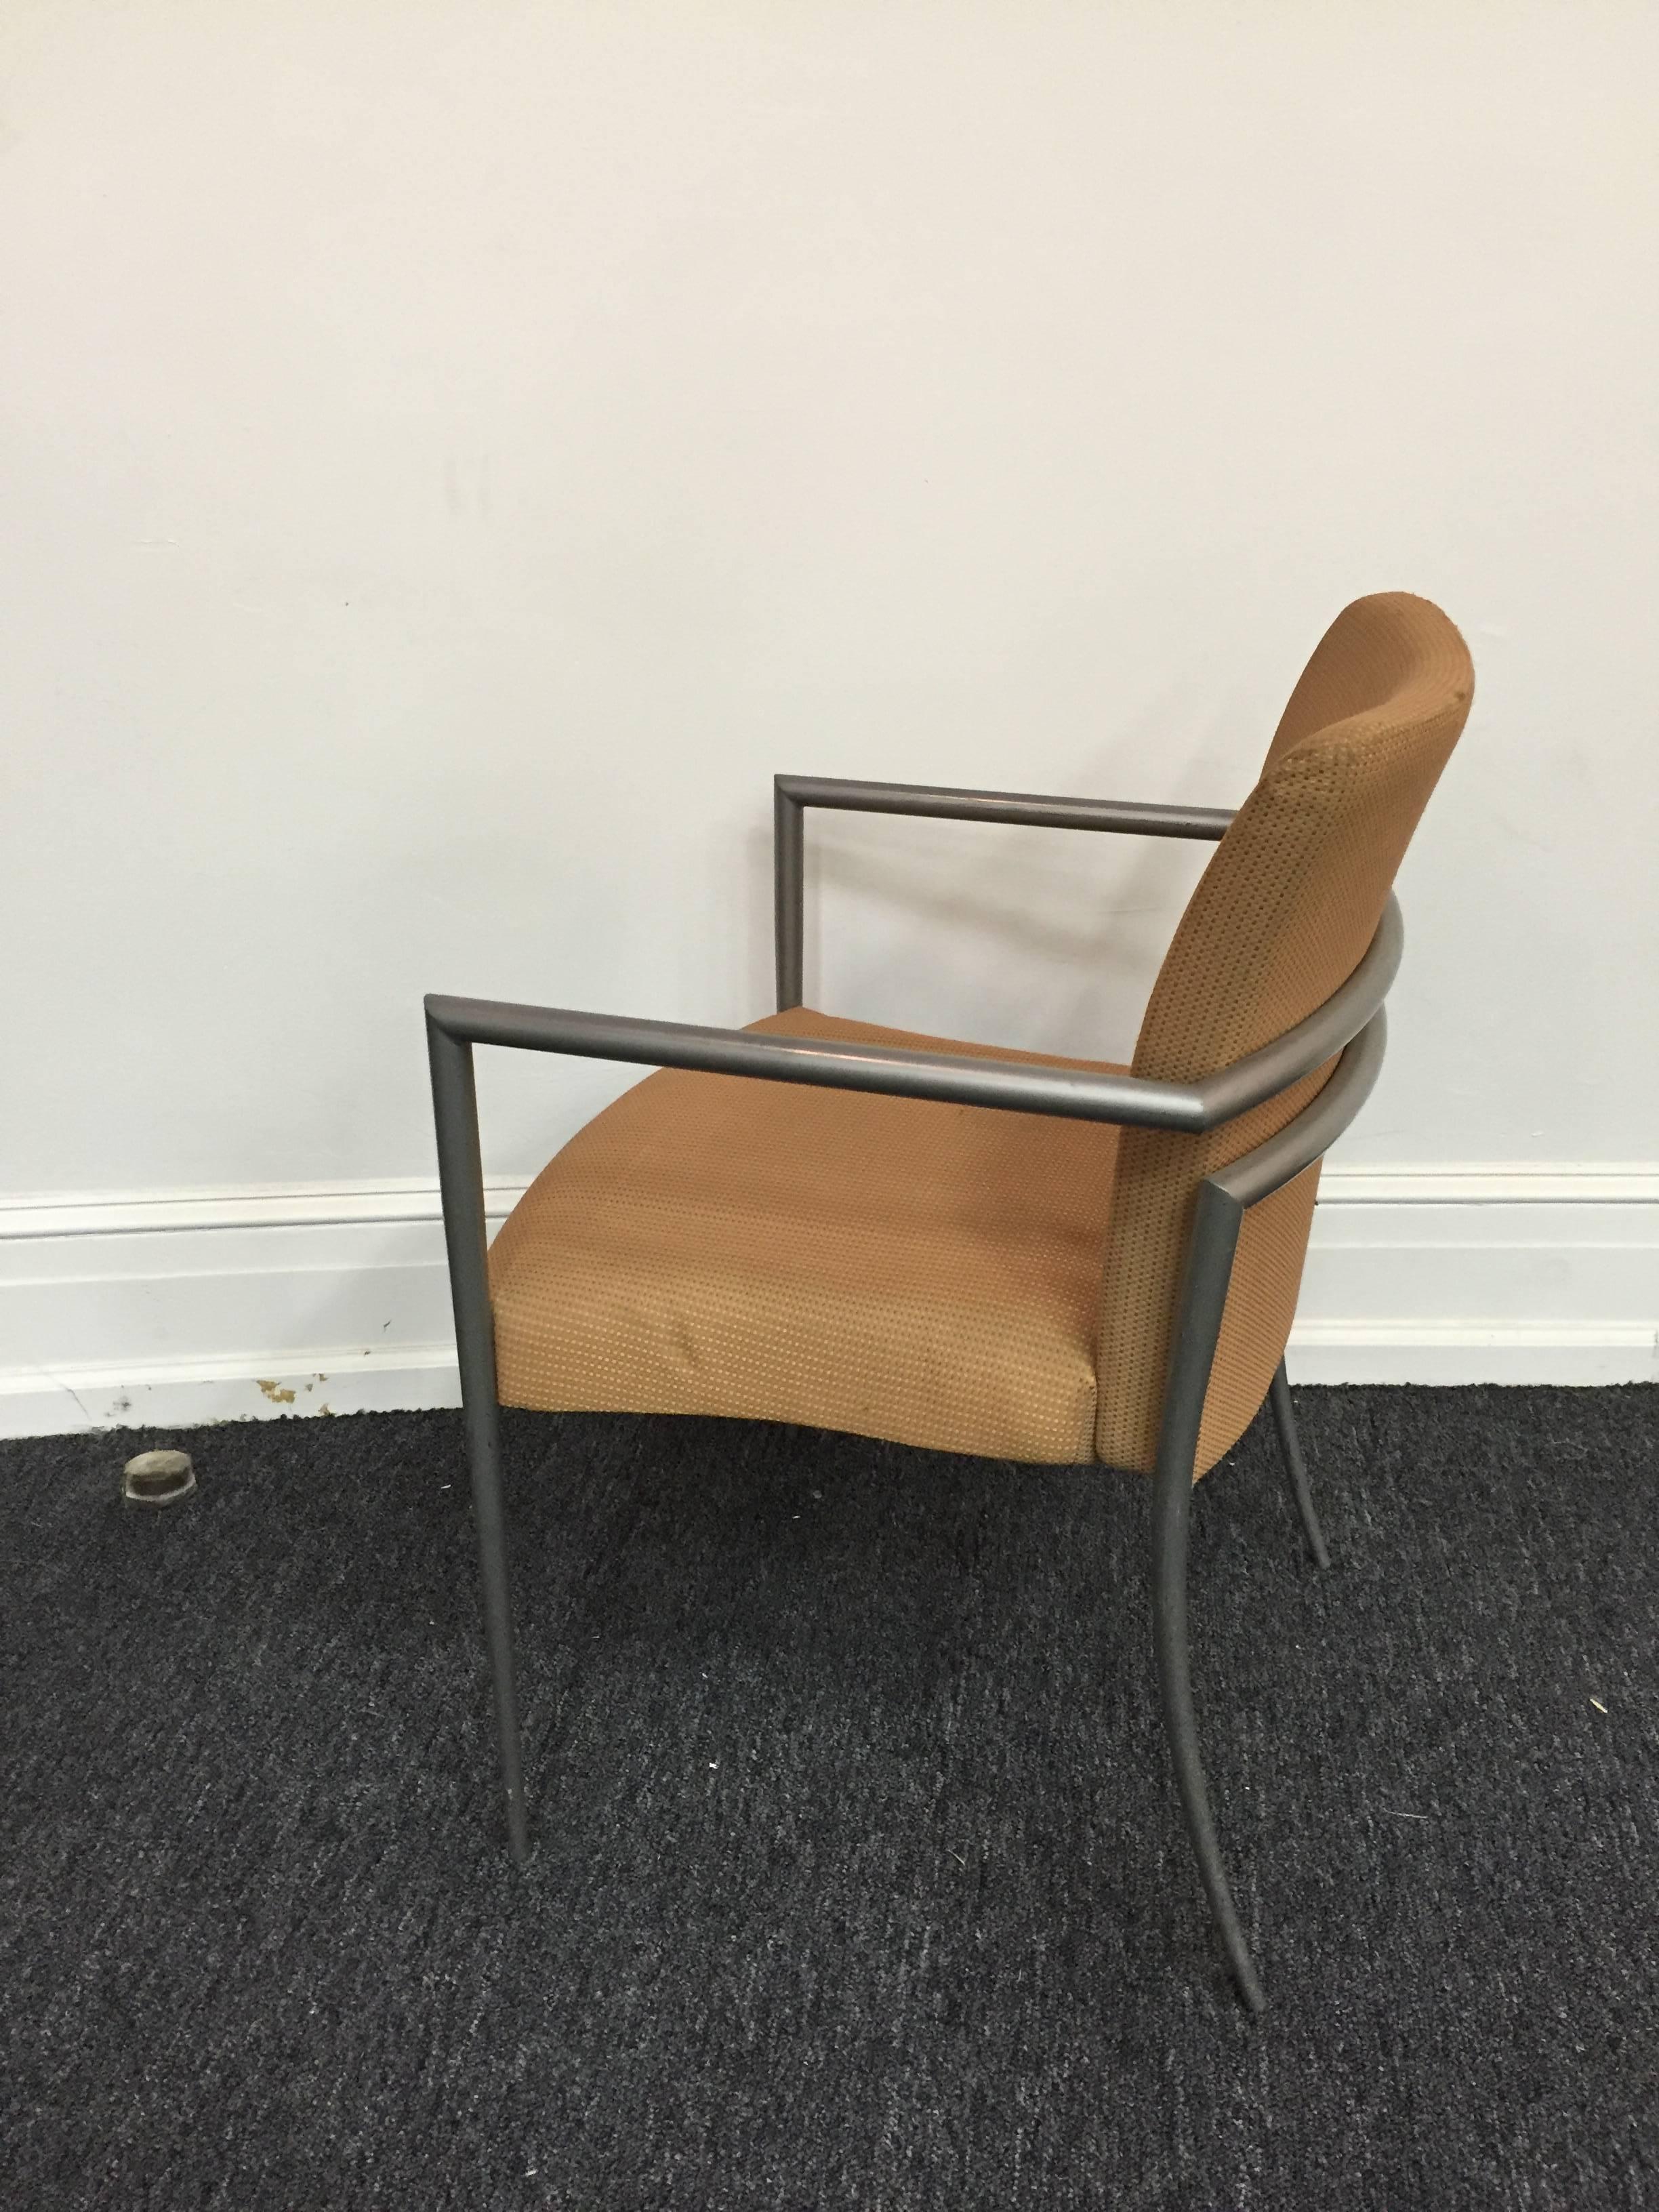 20th Century Sleek Italian Gio Ponti Style Chairs For Sale